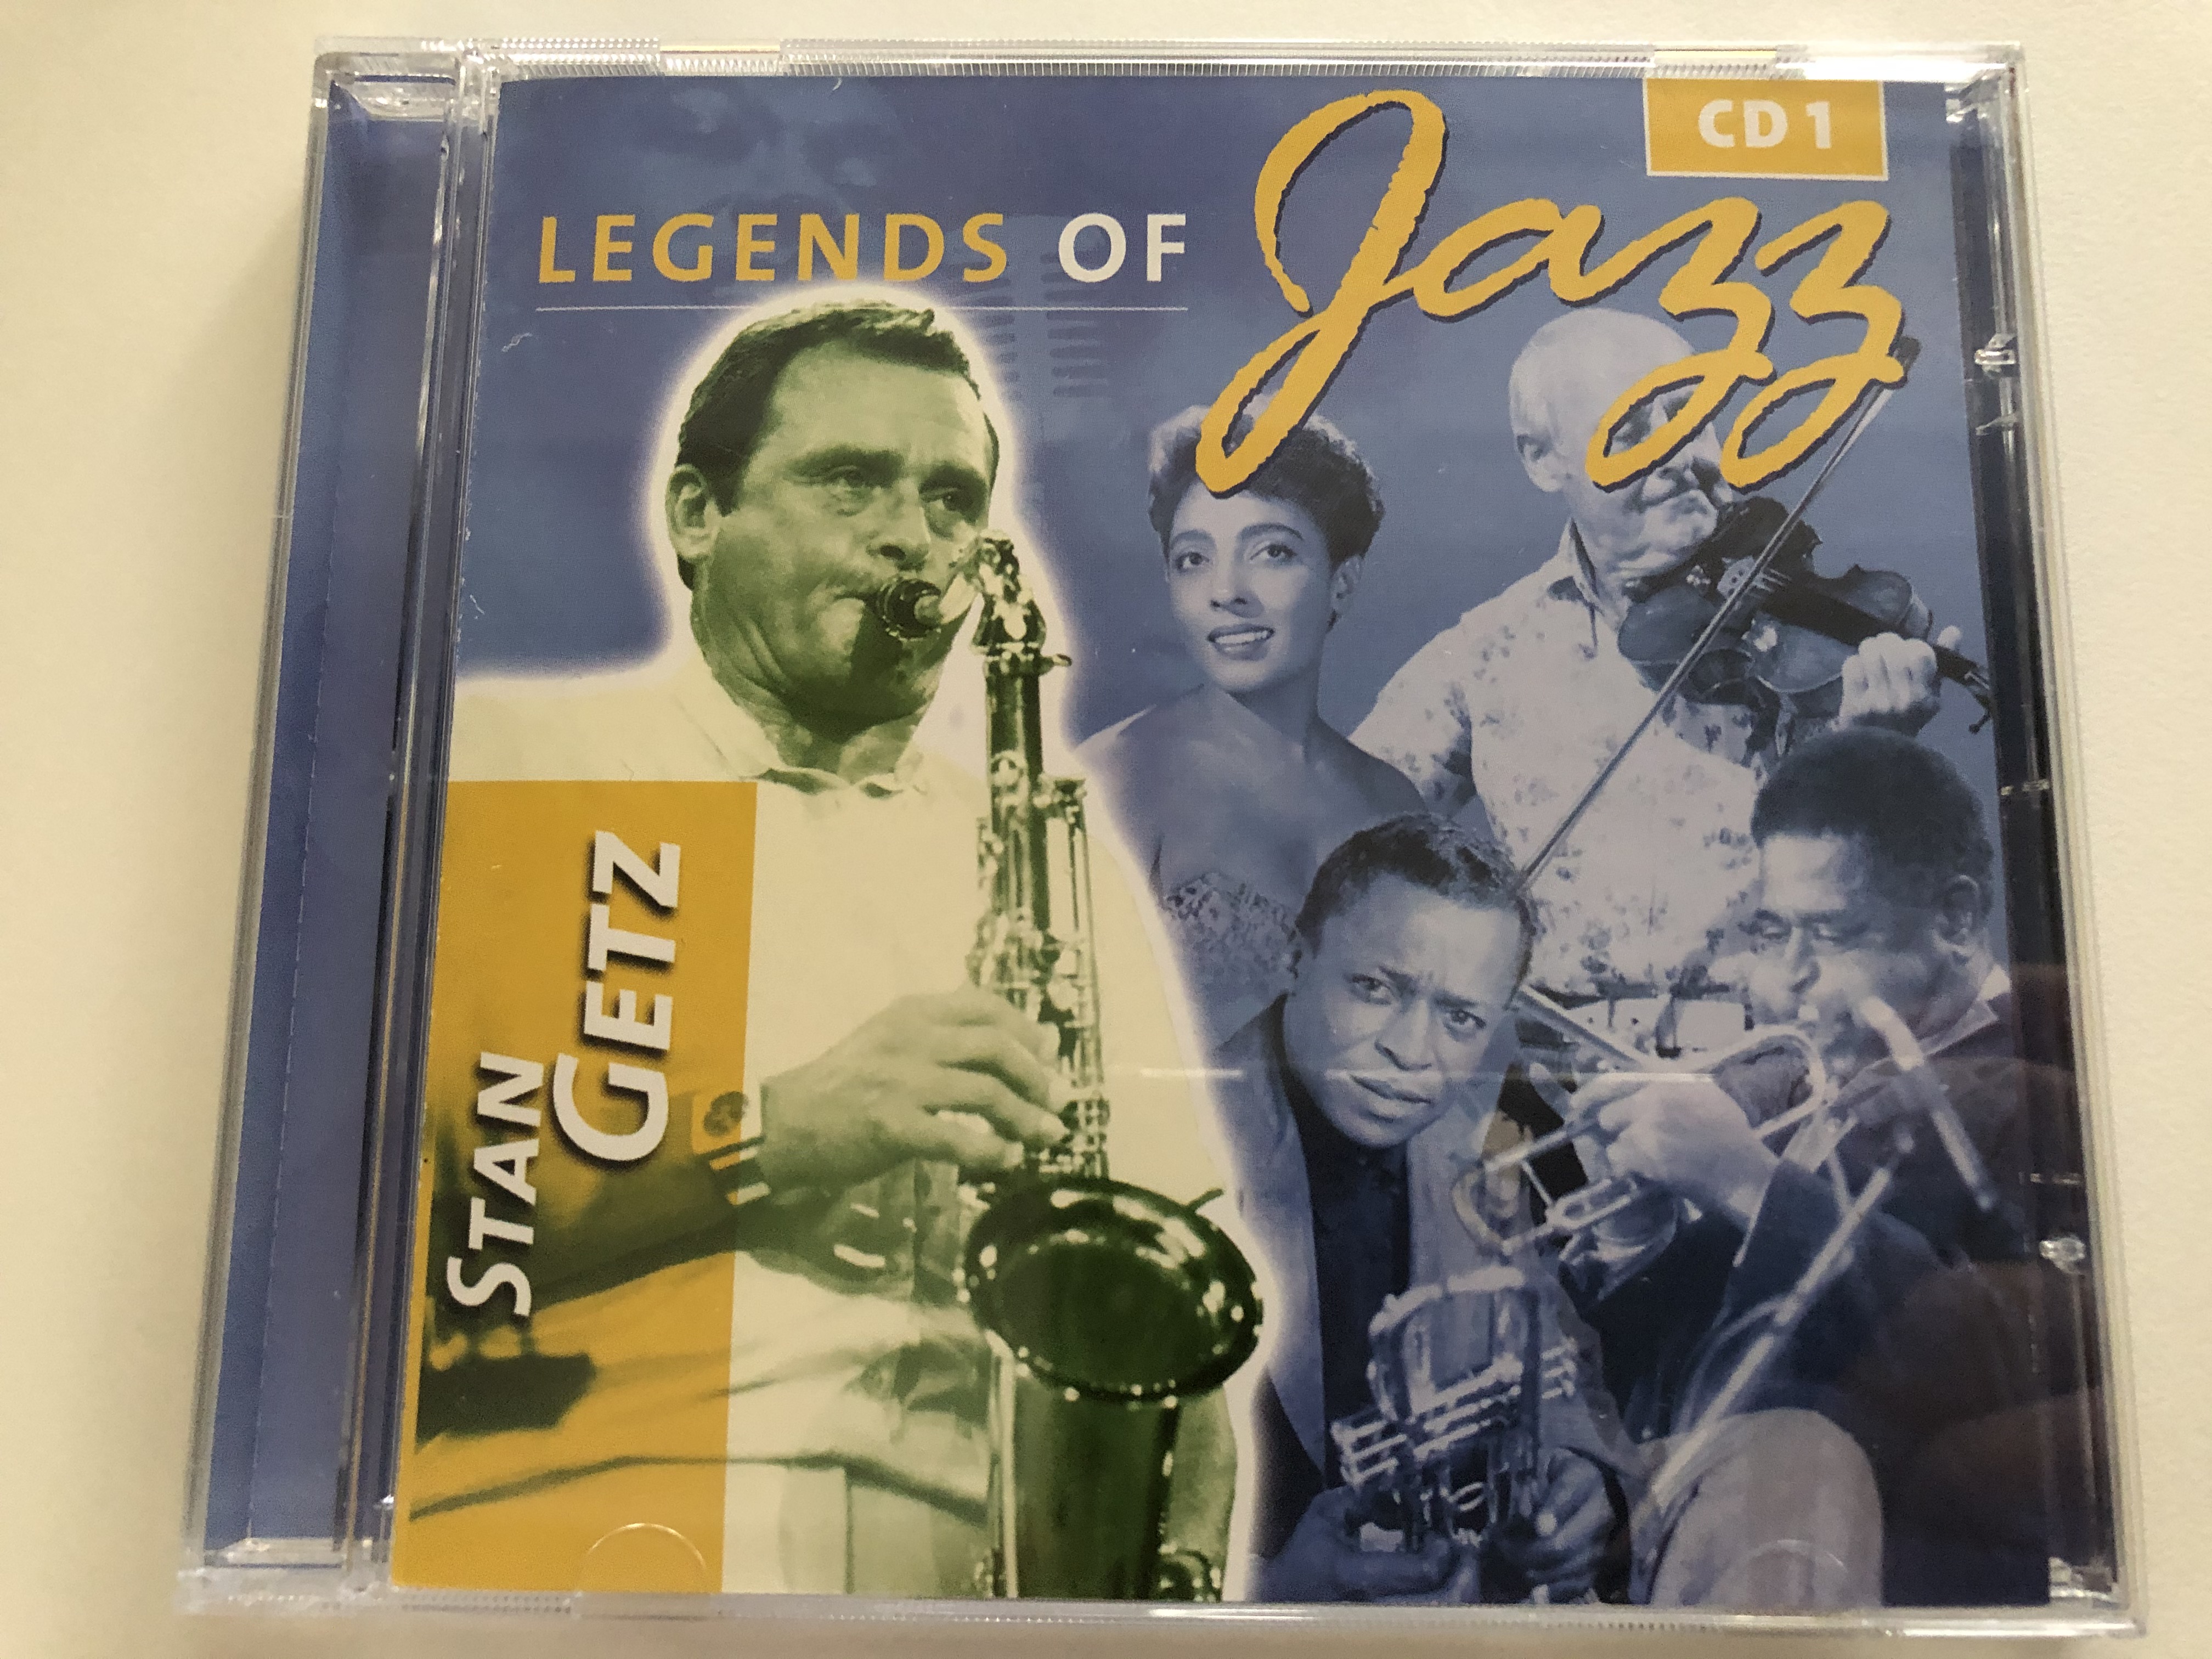 legends-of-jazz-stan-getz-cd-1-rainbowcd.com-audio-cd-6296-1-.jpg